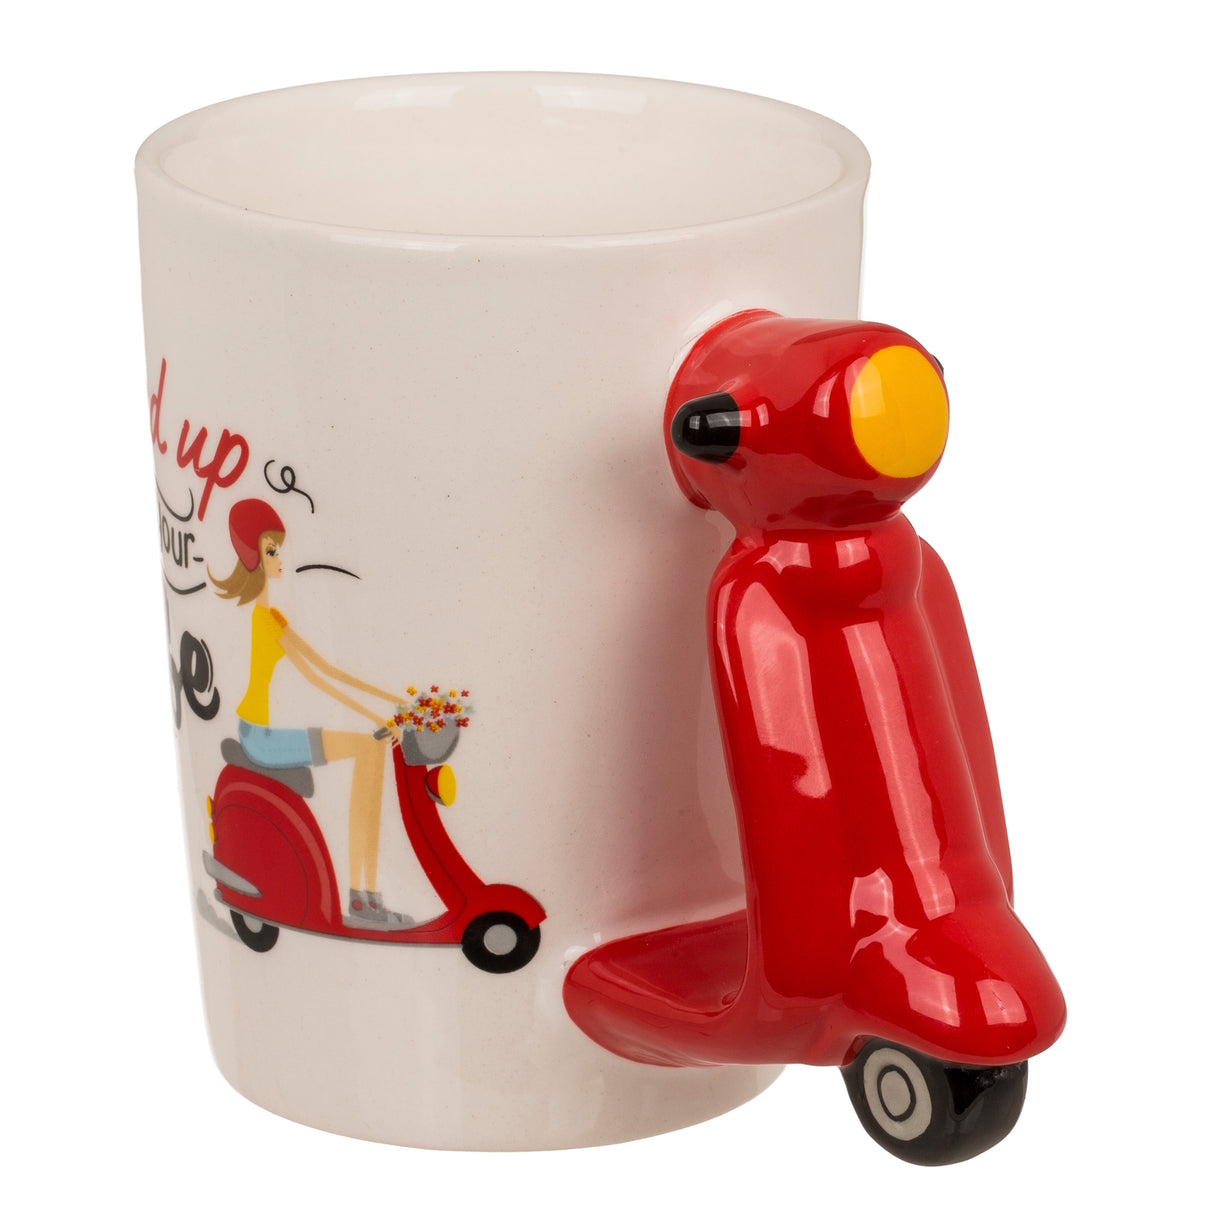 Speed up your Life Kaffeebecher mit Motorroller als Henkel